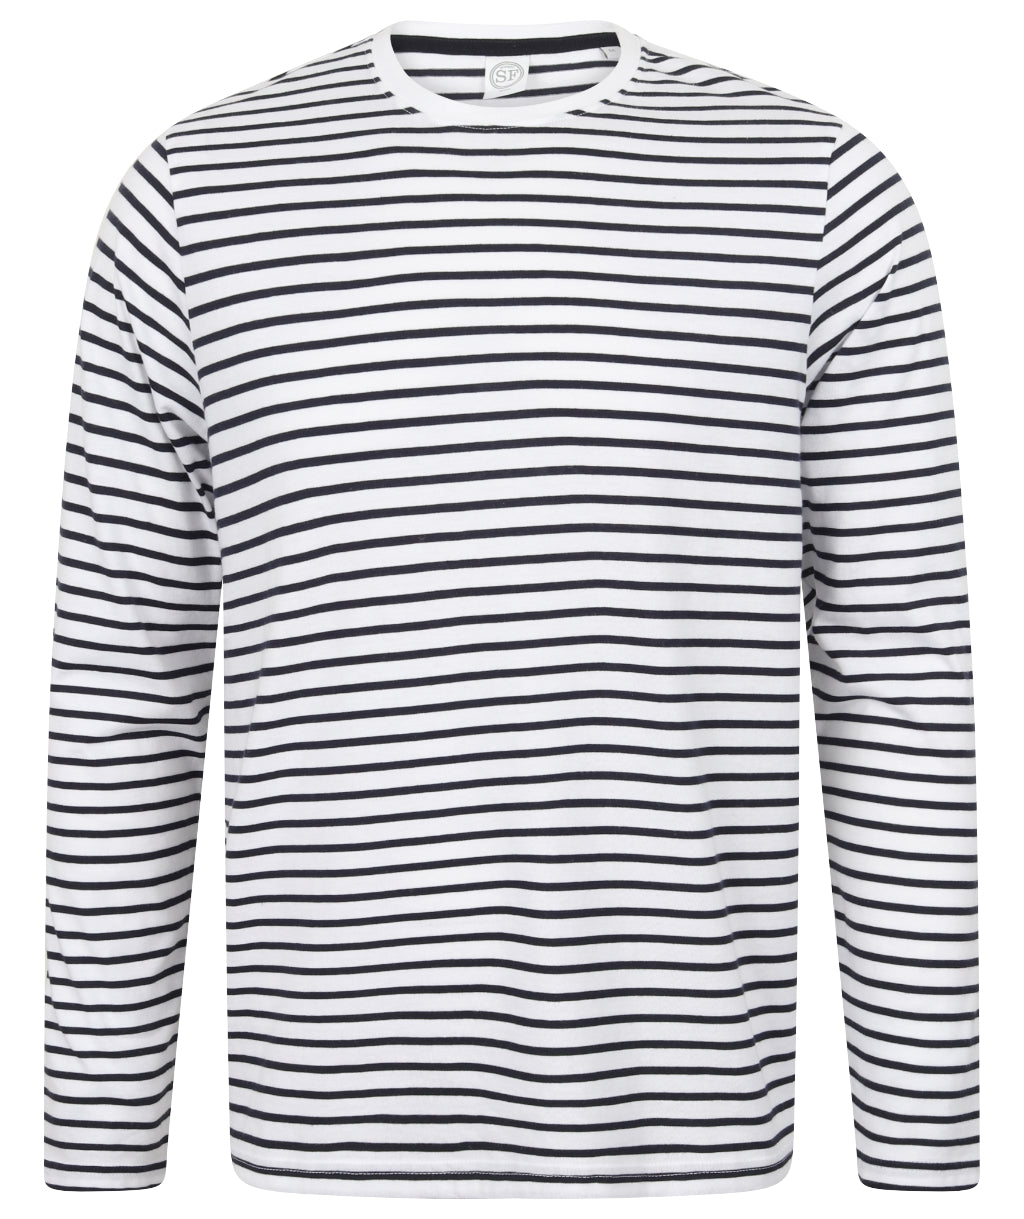 Unisex Long Sleeved Striped T-Shirt